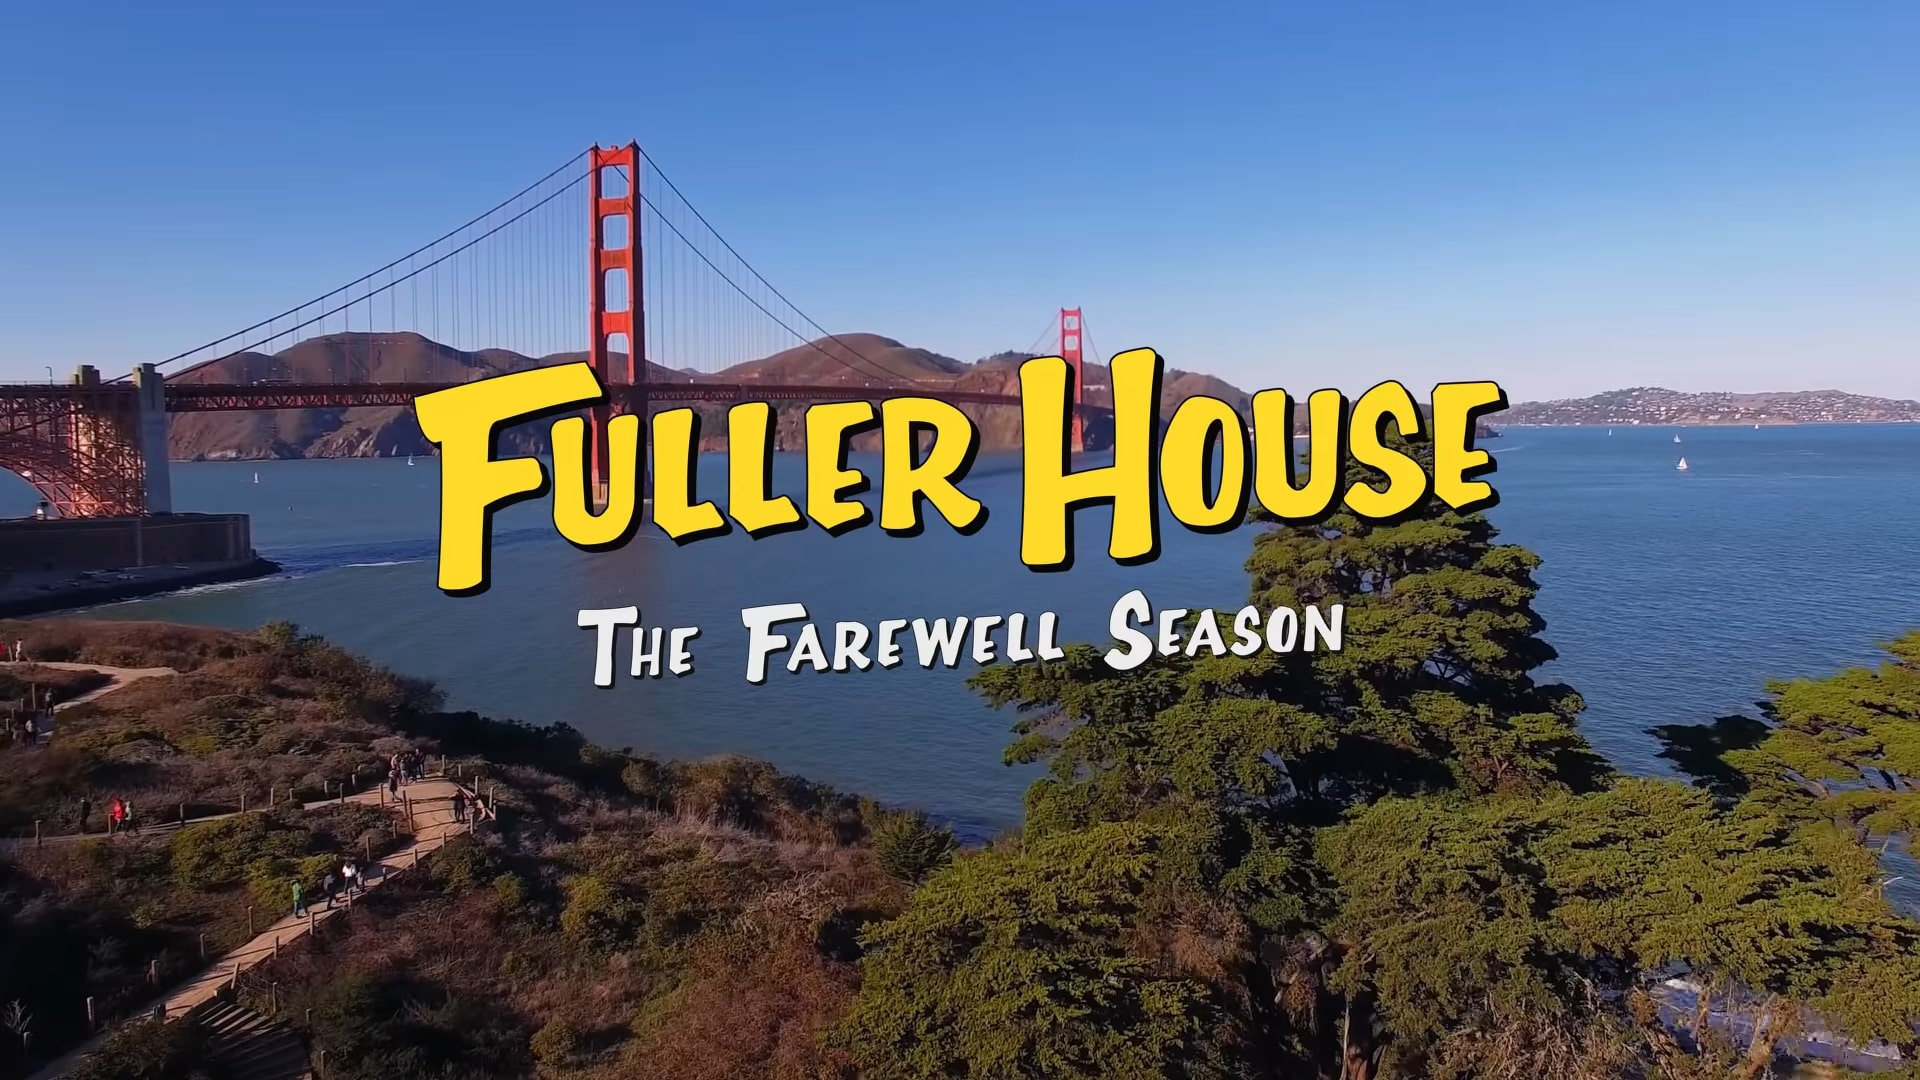 Netflix Farewell Season Fuller House Trailer, Netflix Comedy, Netflix Comedies, Coming to Netflix in May 2020